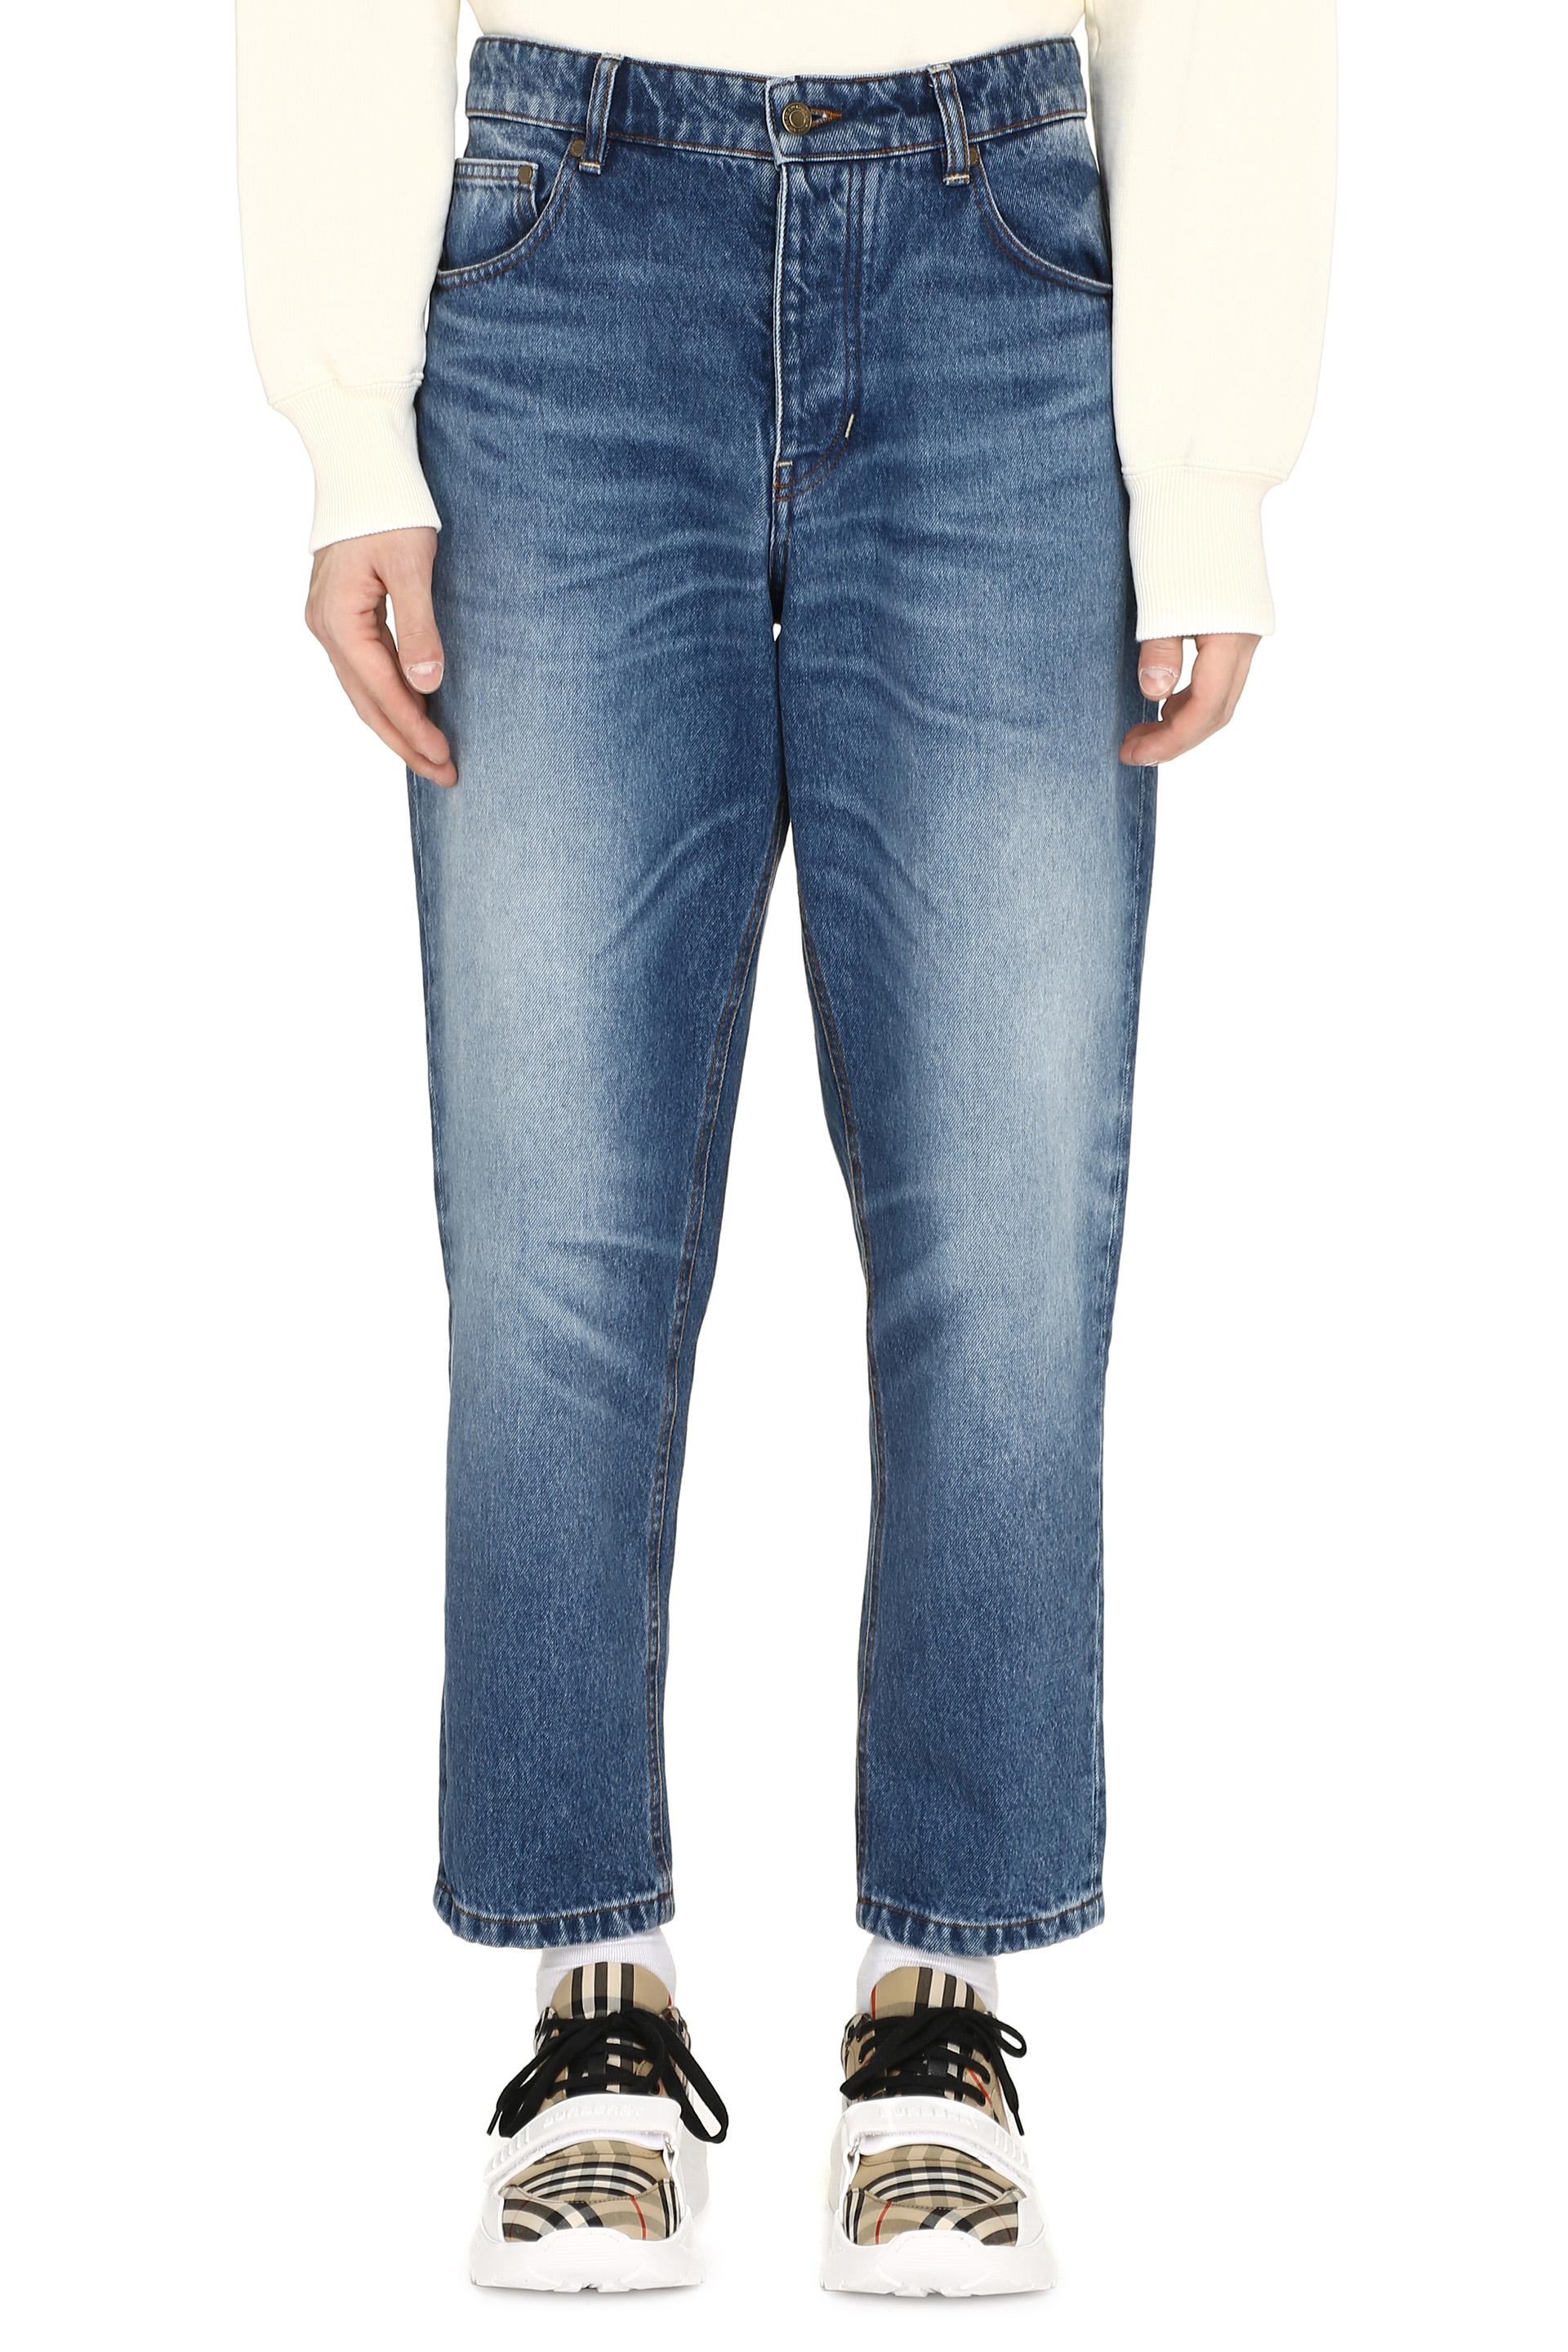 AMI Denim Carrot-fit Jeans in Denim (Blue) for Men - Lyst